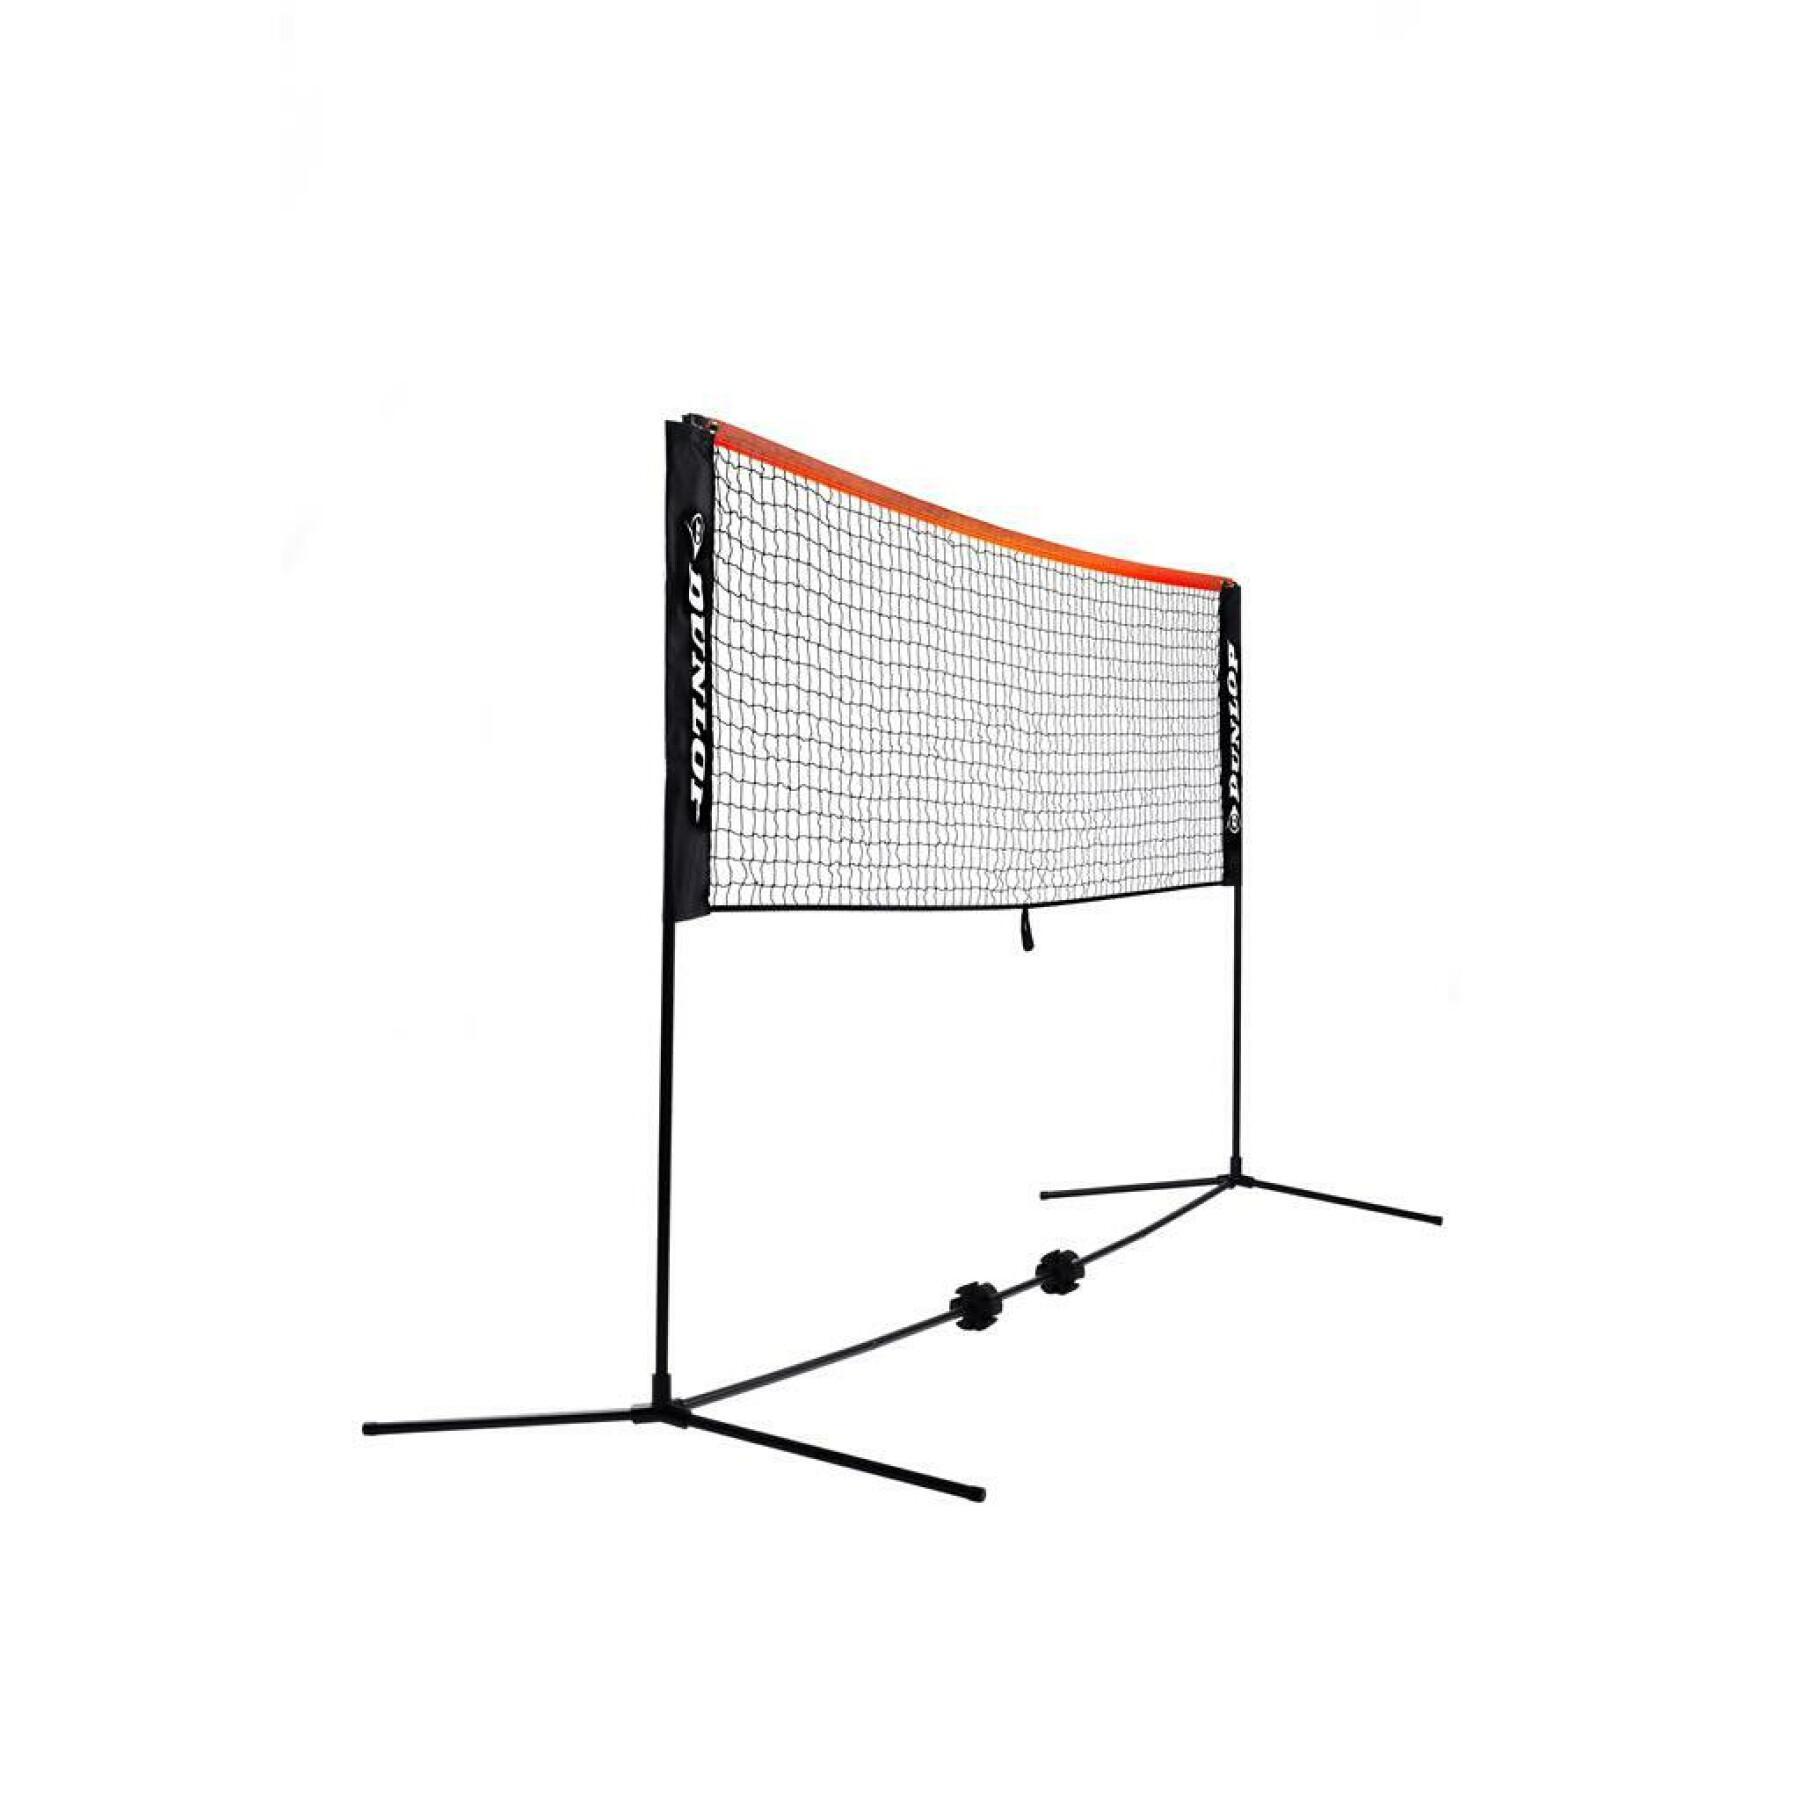 Filet Dunlop mini tennis/badminton